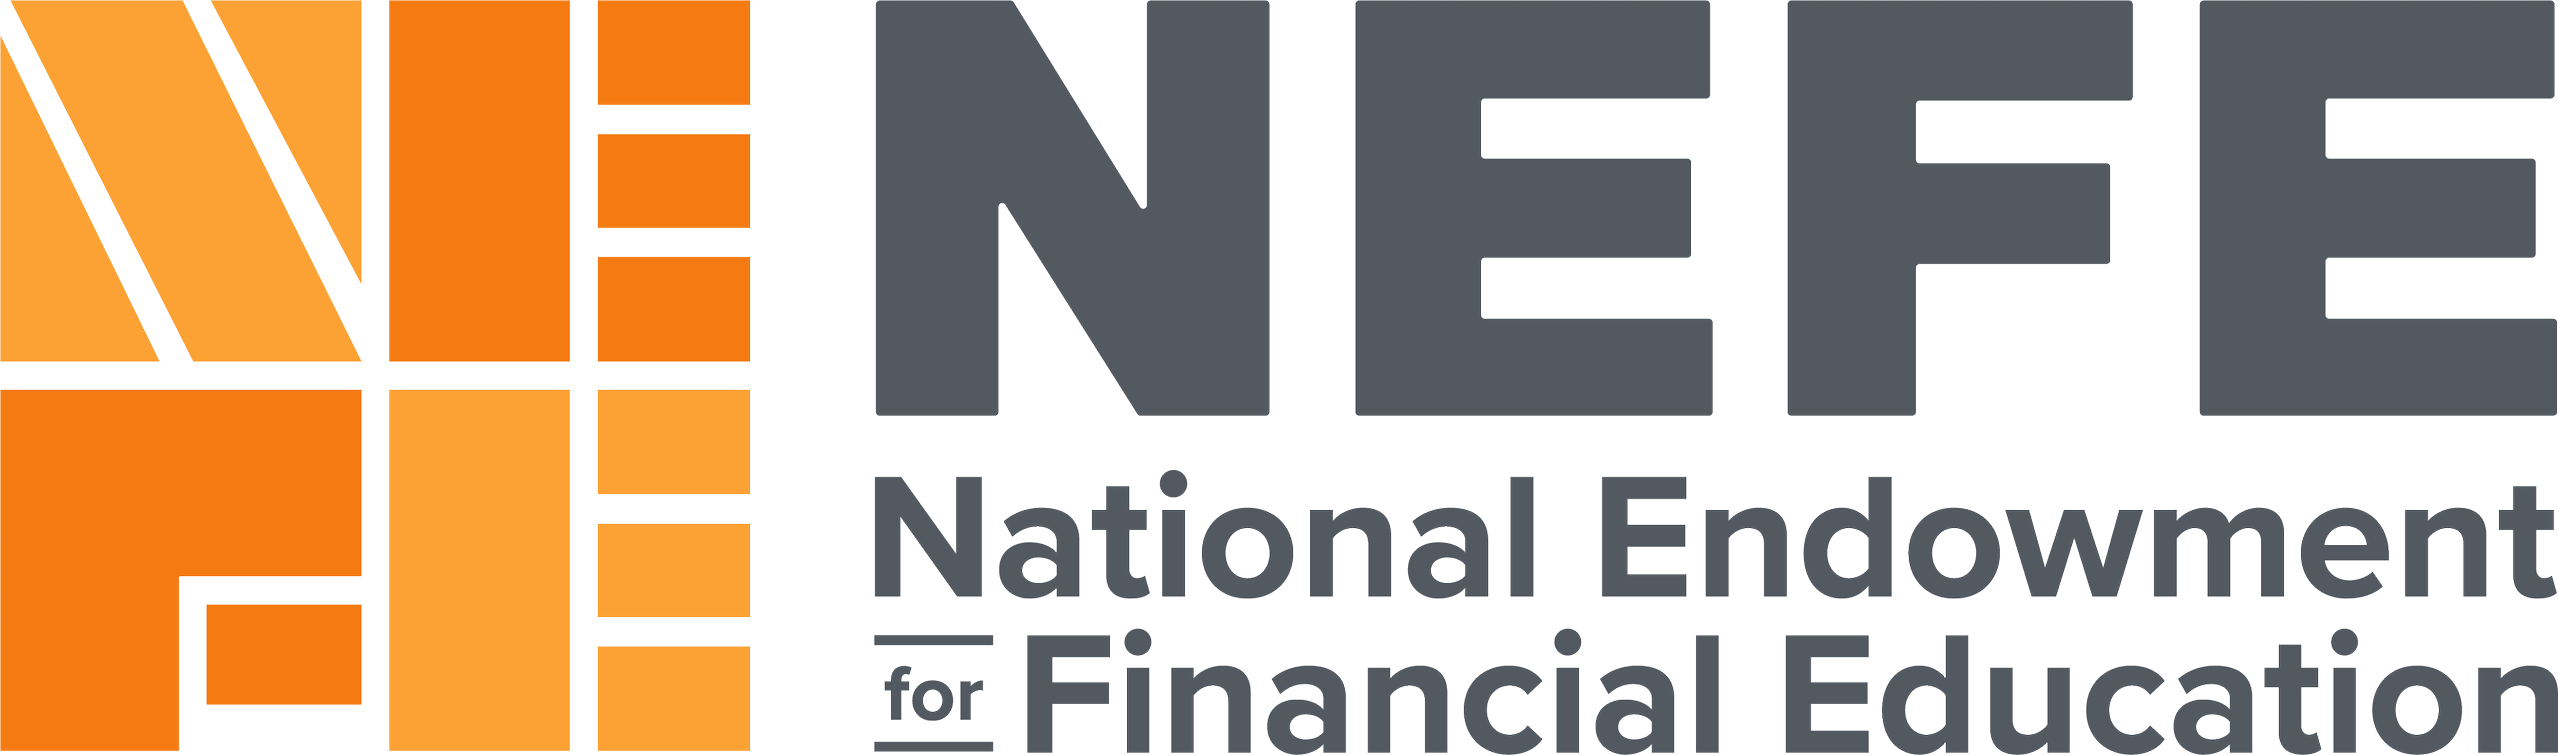 National Endowment for Financial Education logo